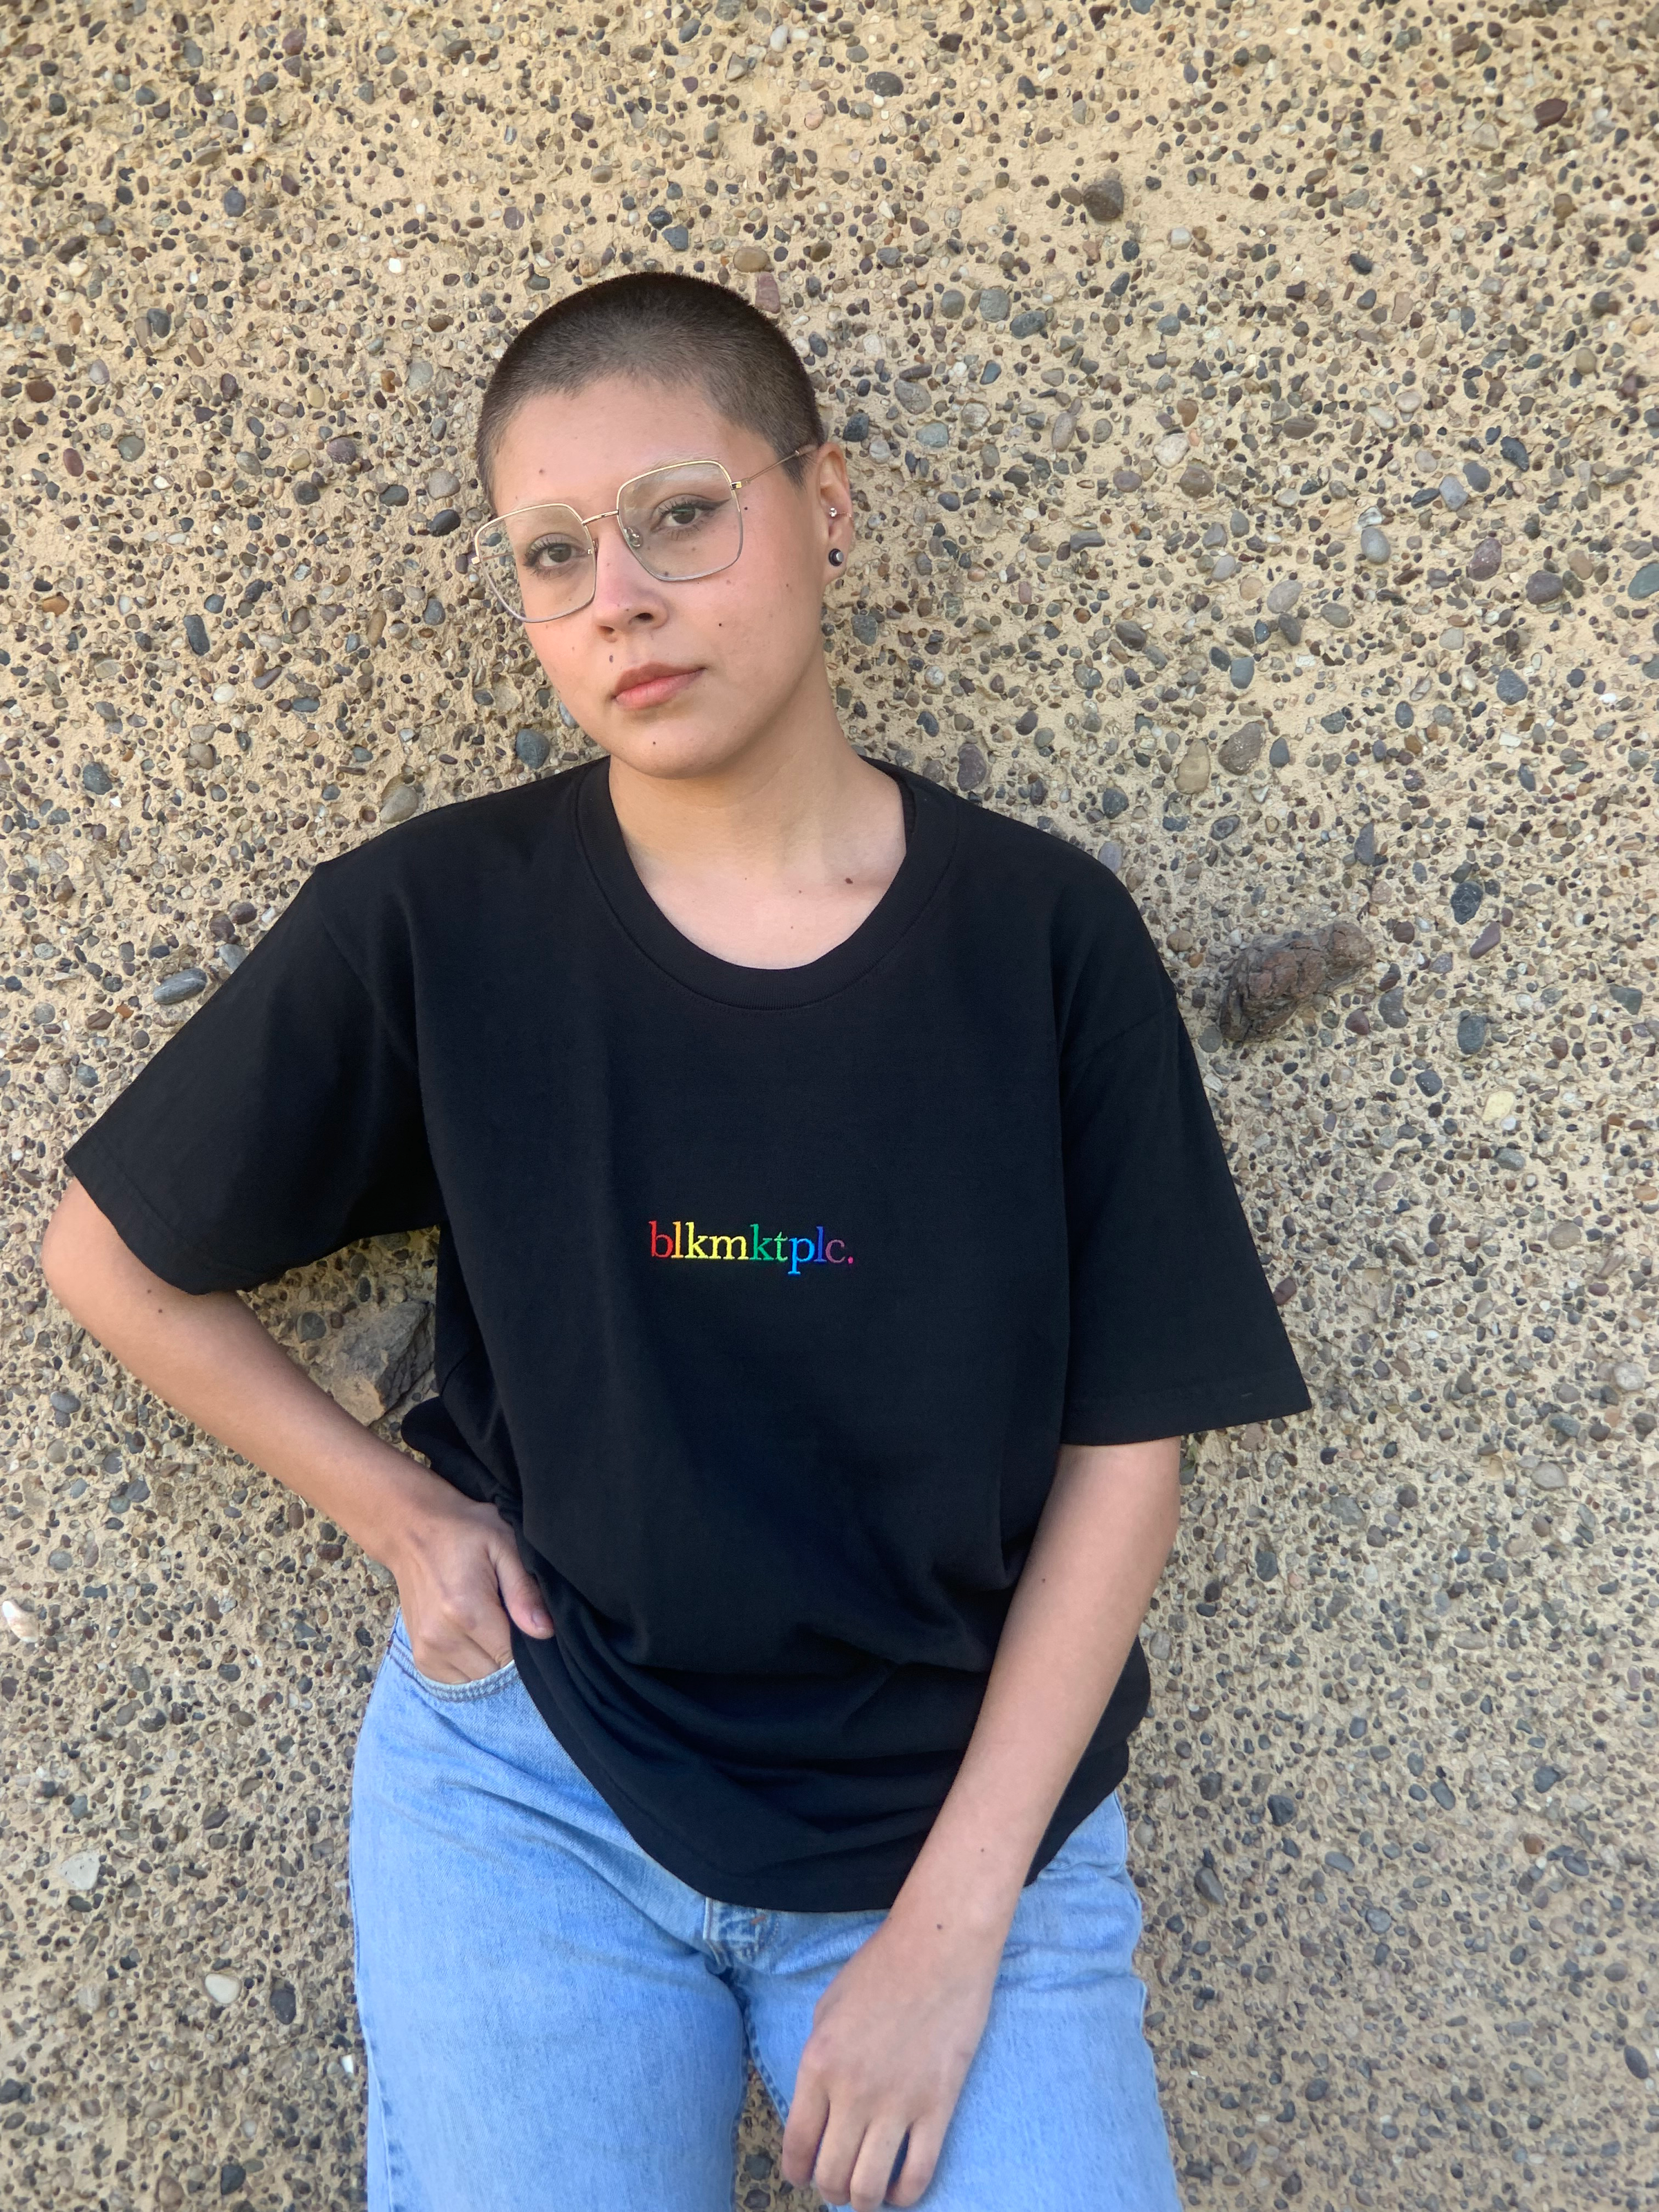 Rainbow Printed T-Shirt - Ready-to-Wear 1AB4UQ